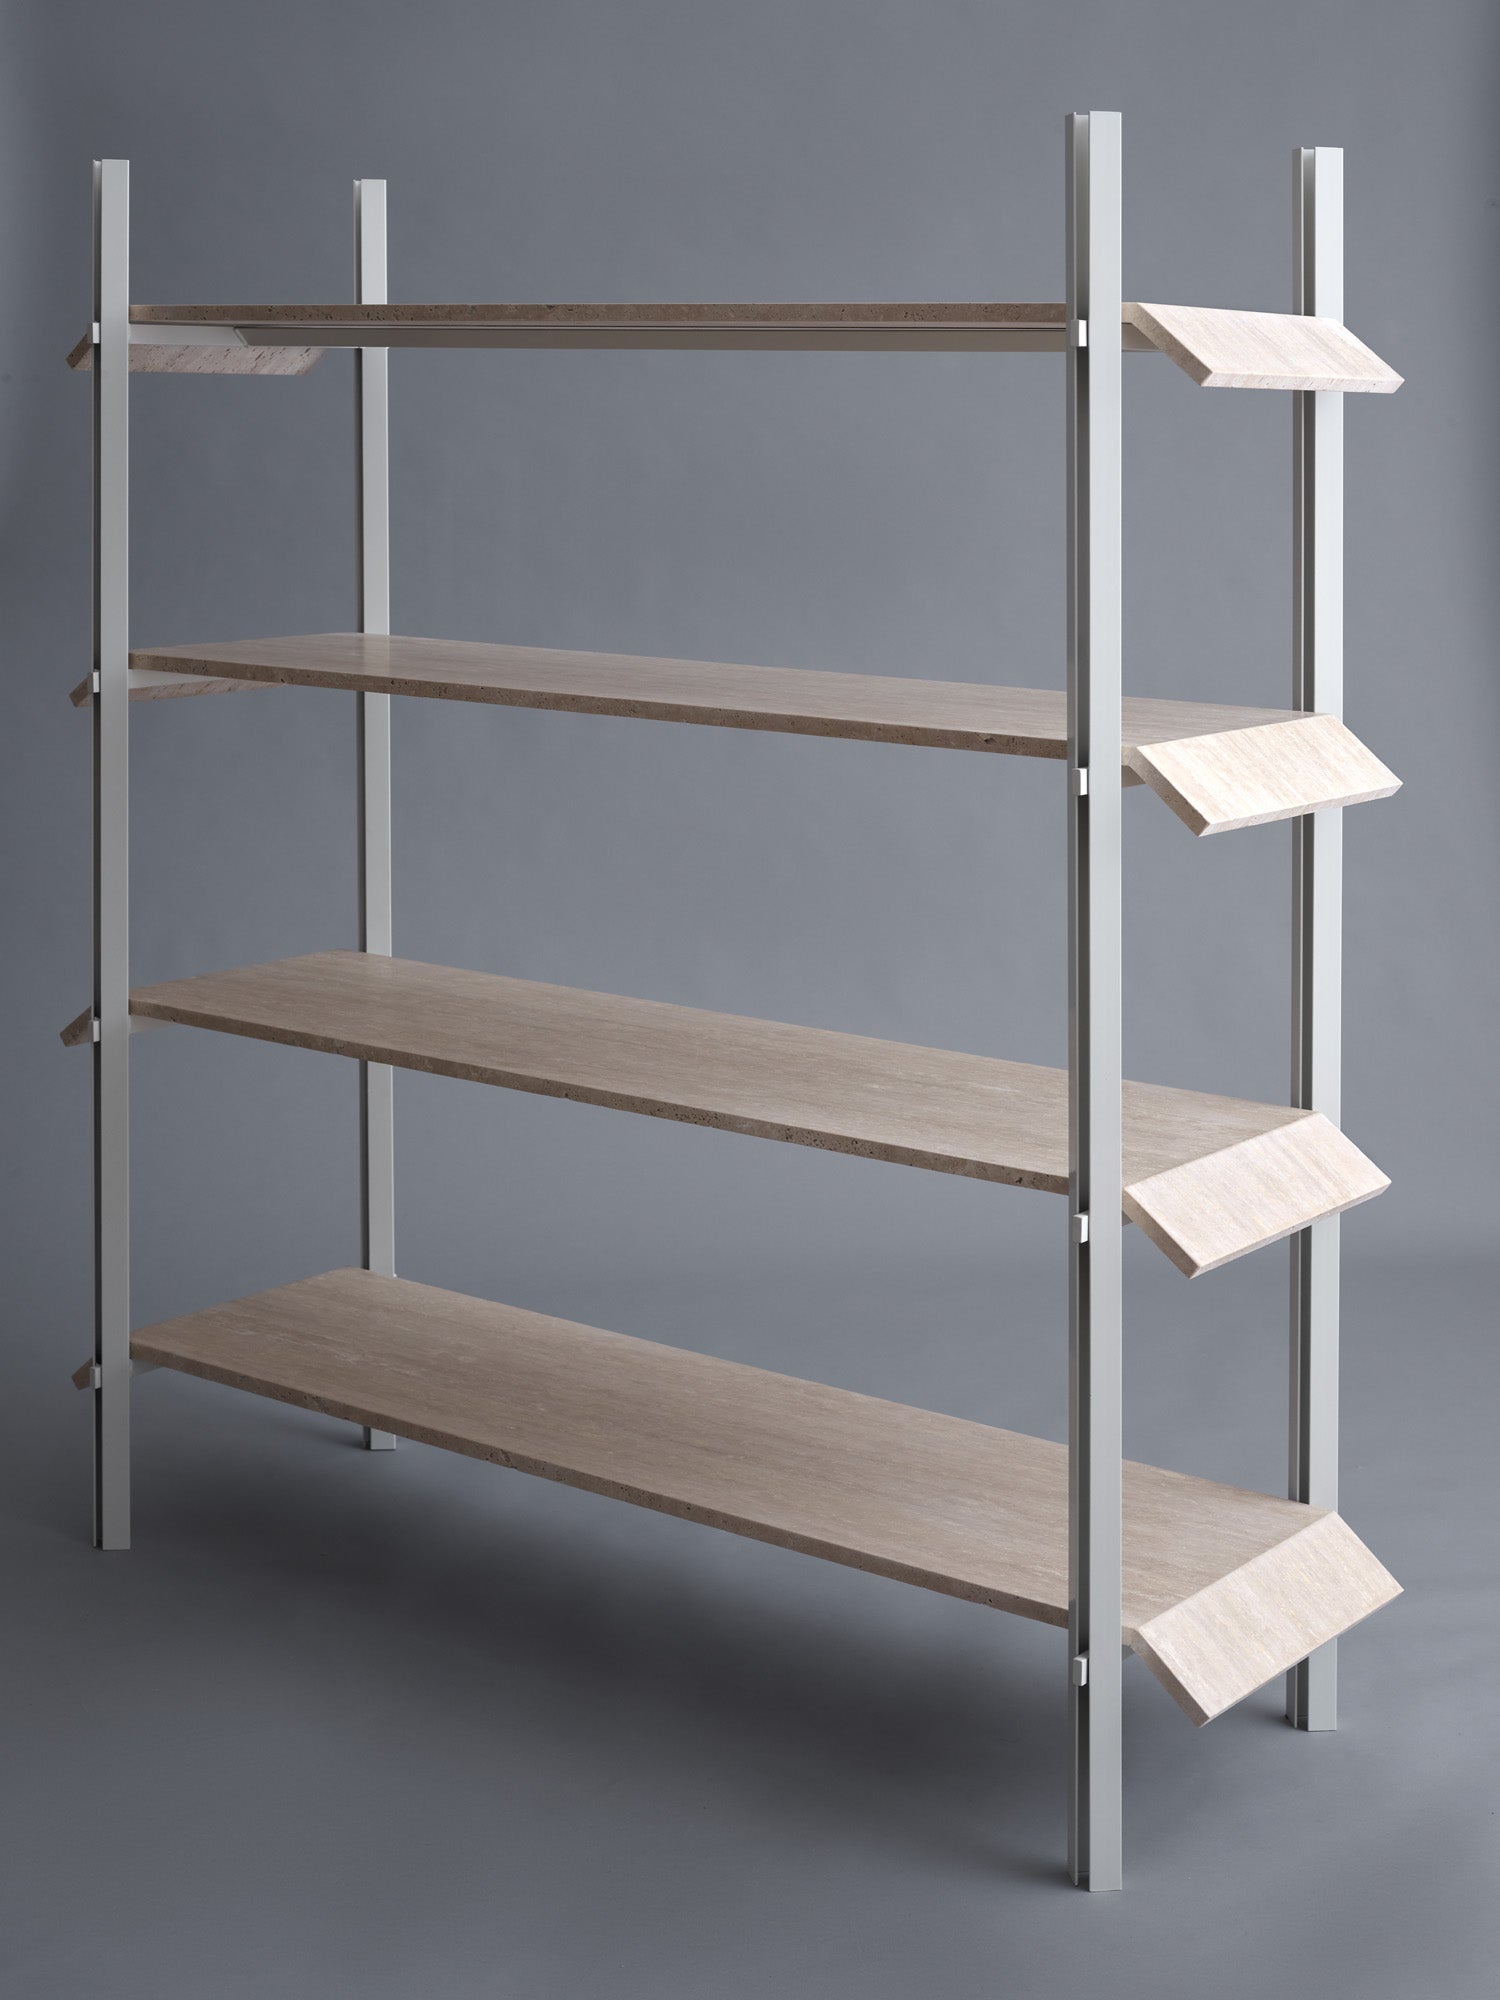 Double edged high shelf